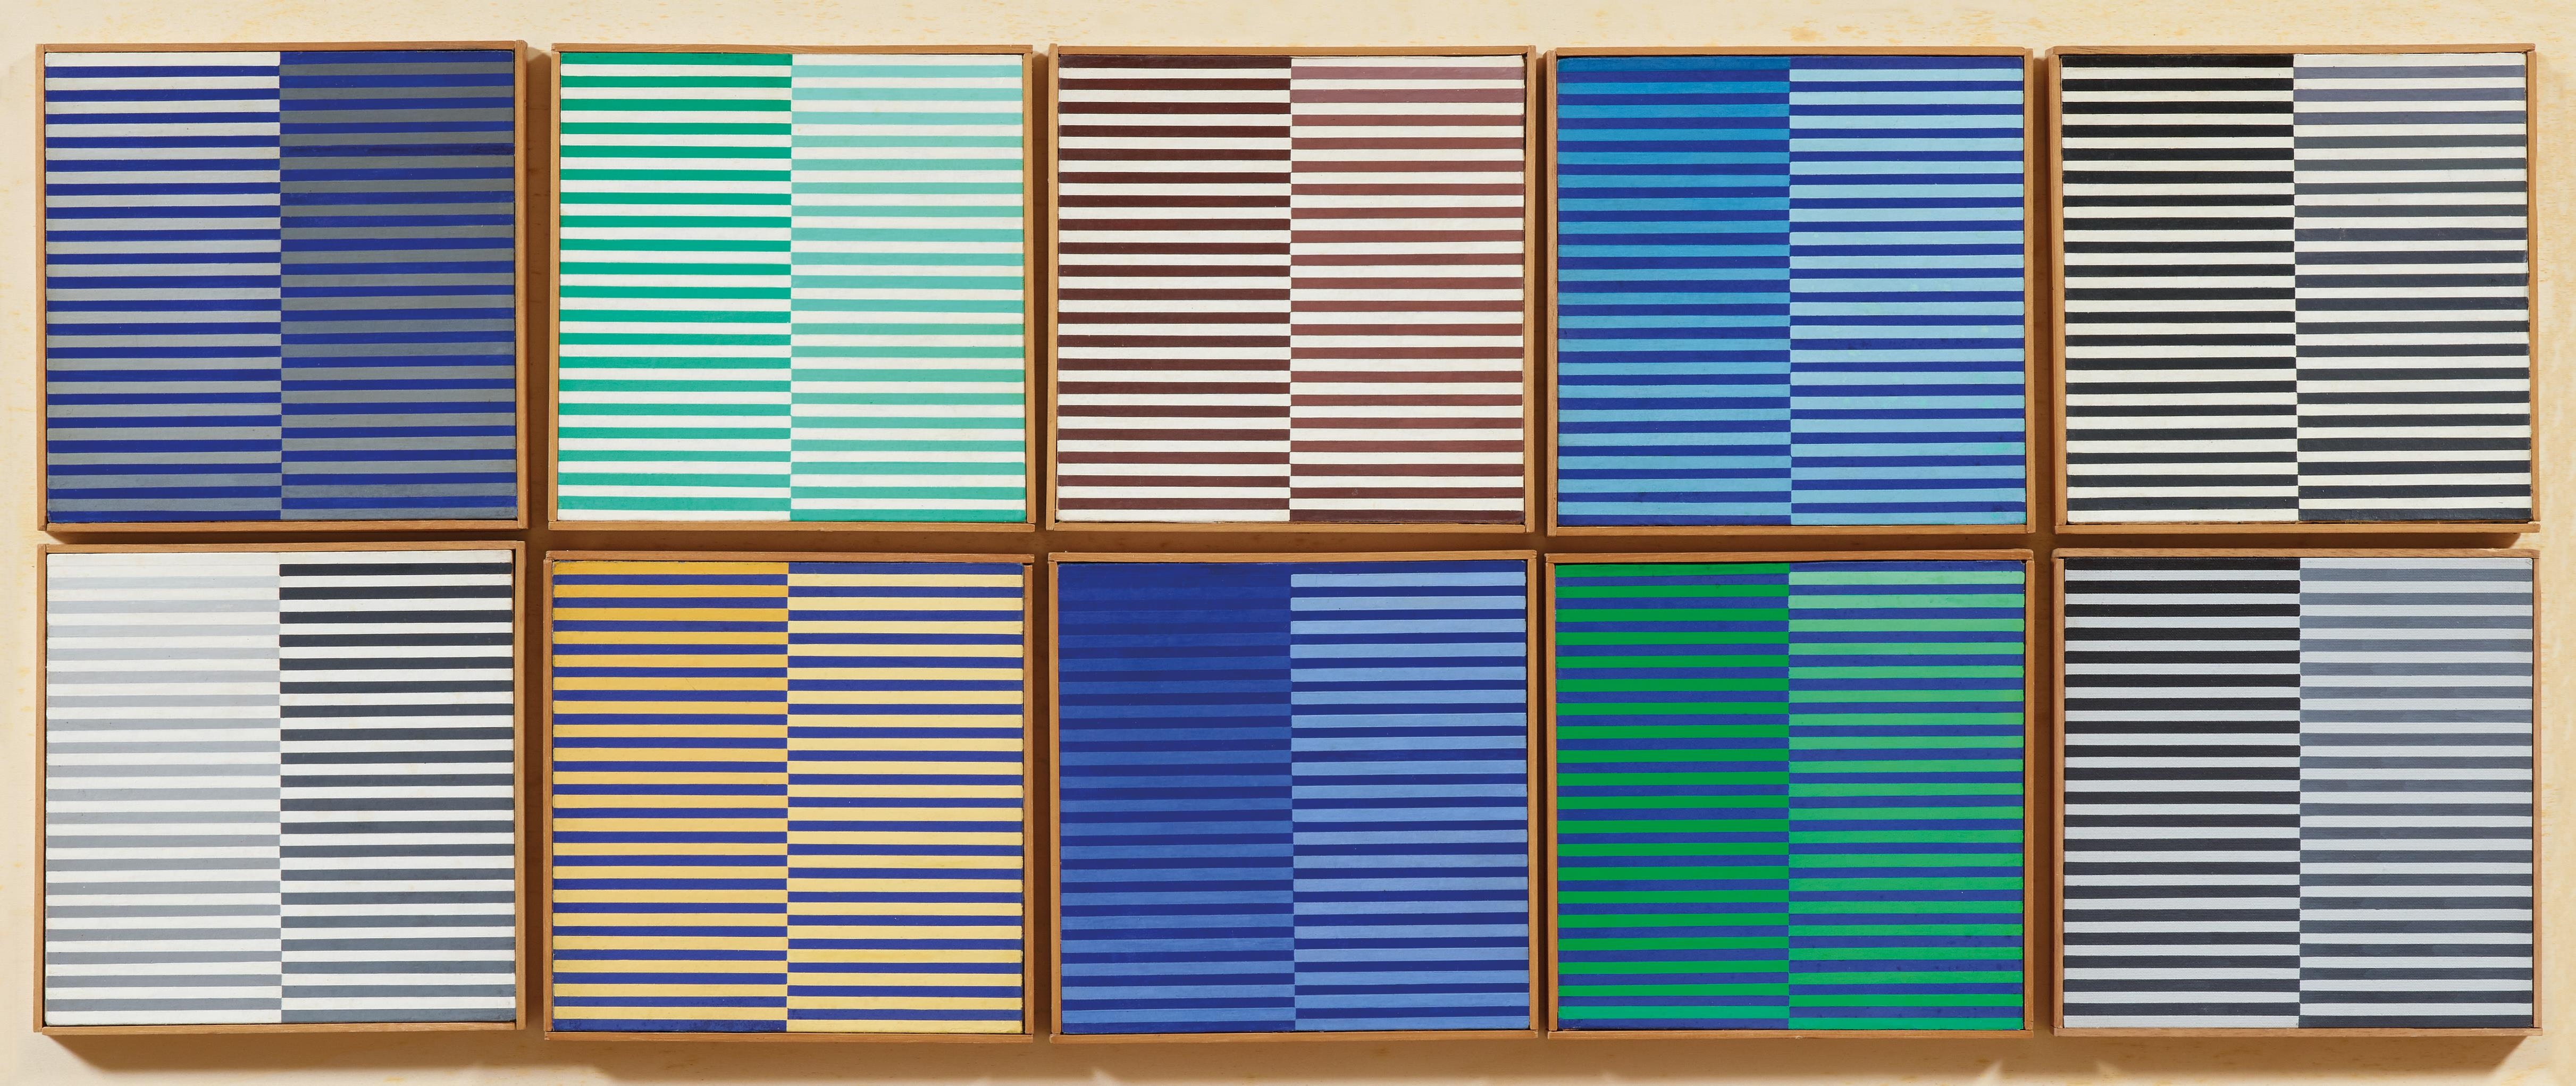 Ricerca del colore by Dadamaino, 1966–1968